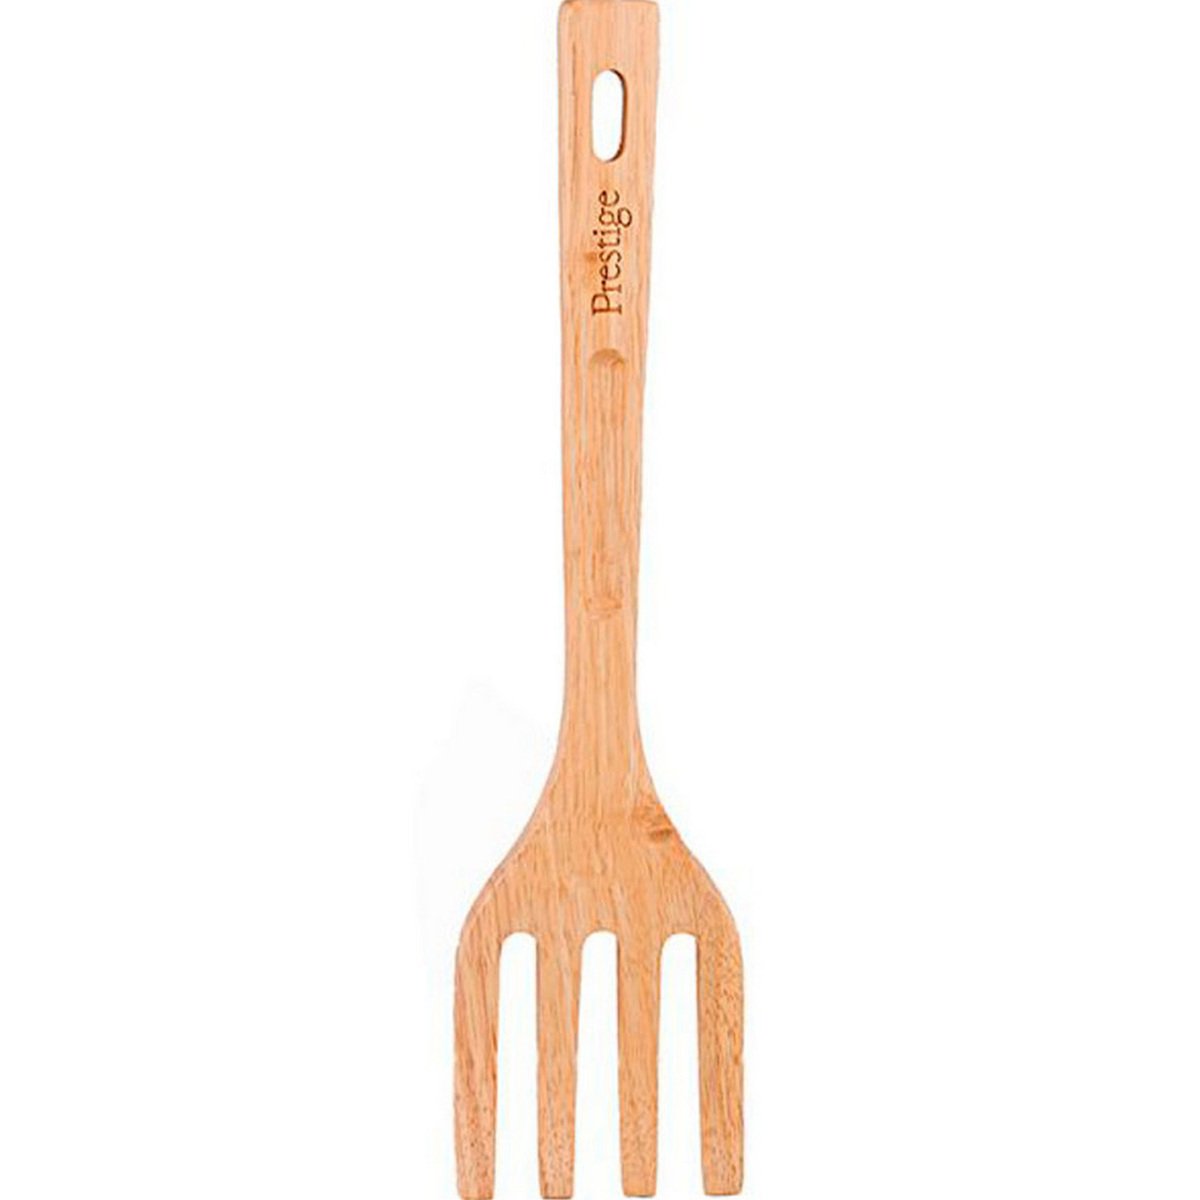 Prestige Wooden Fork PR-51176